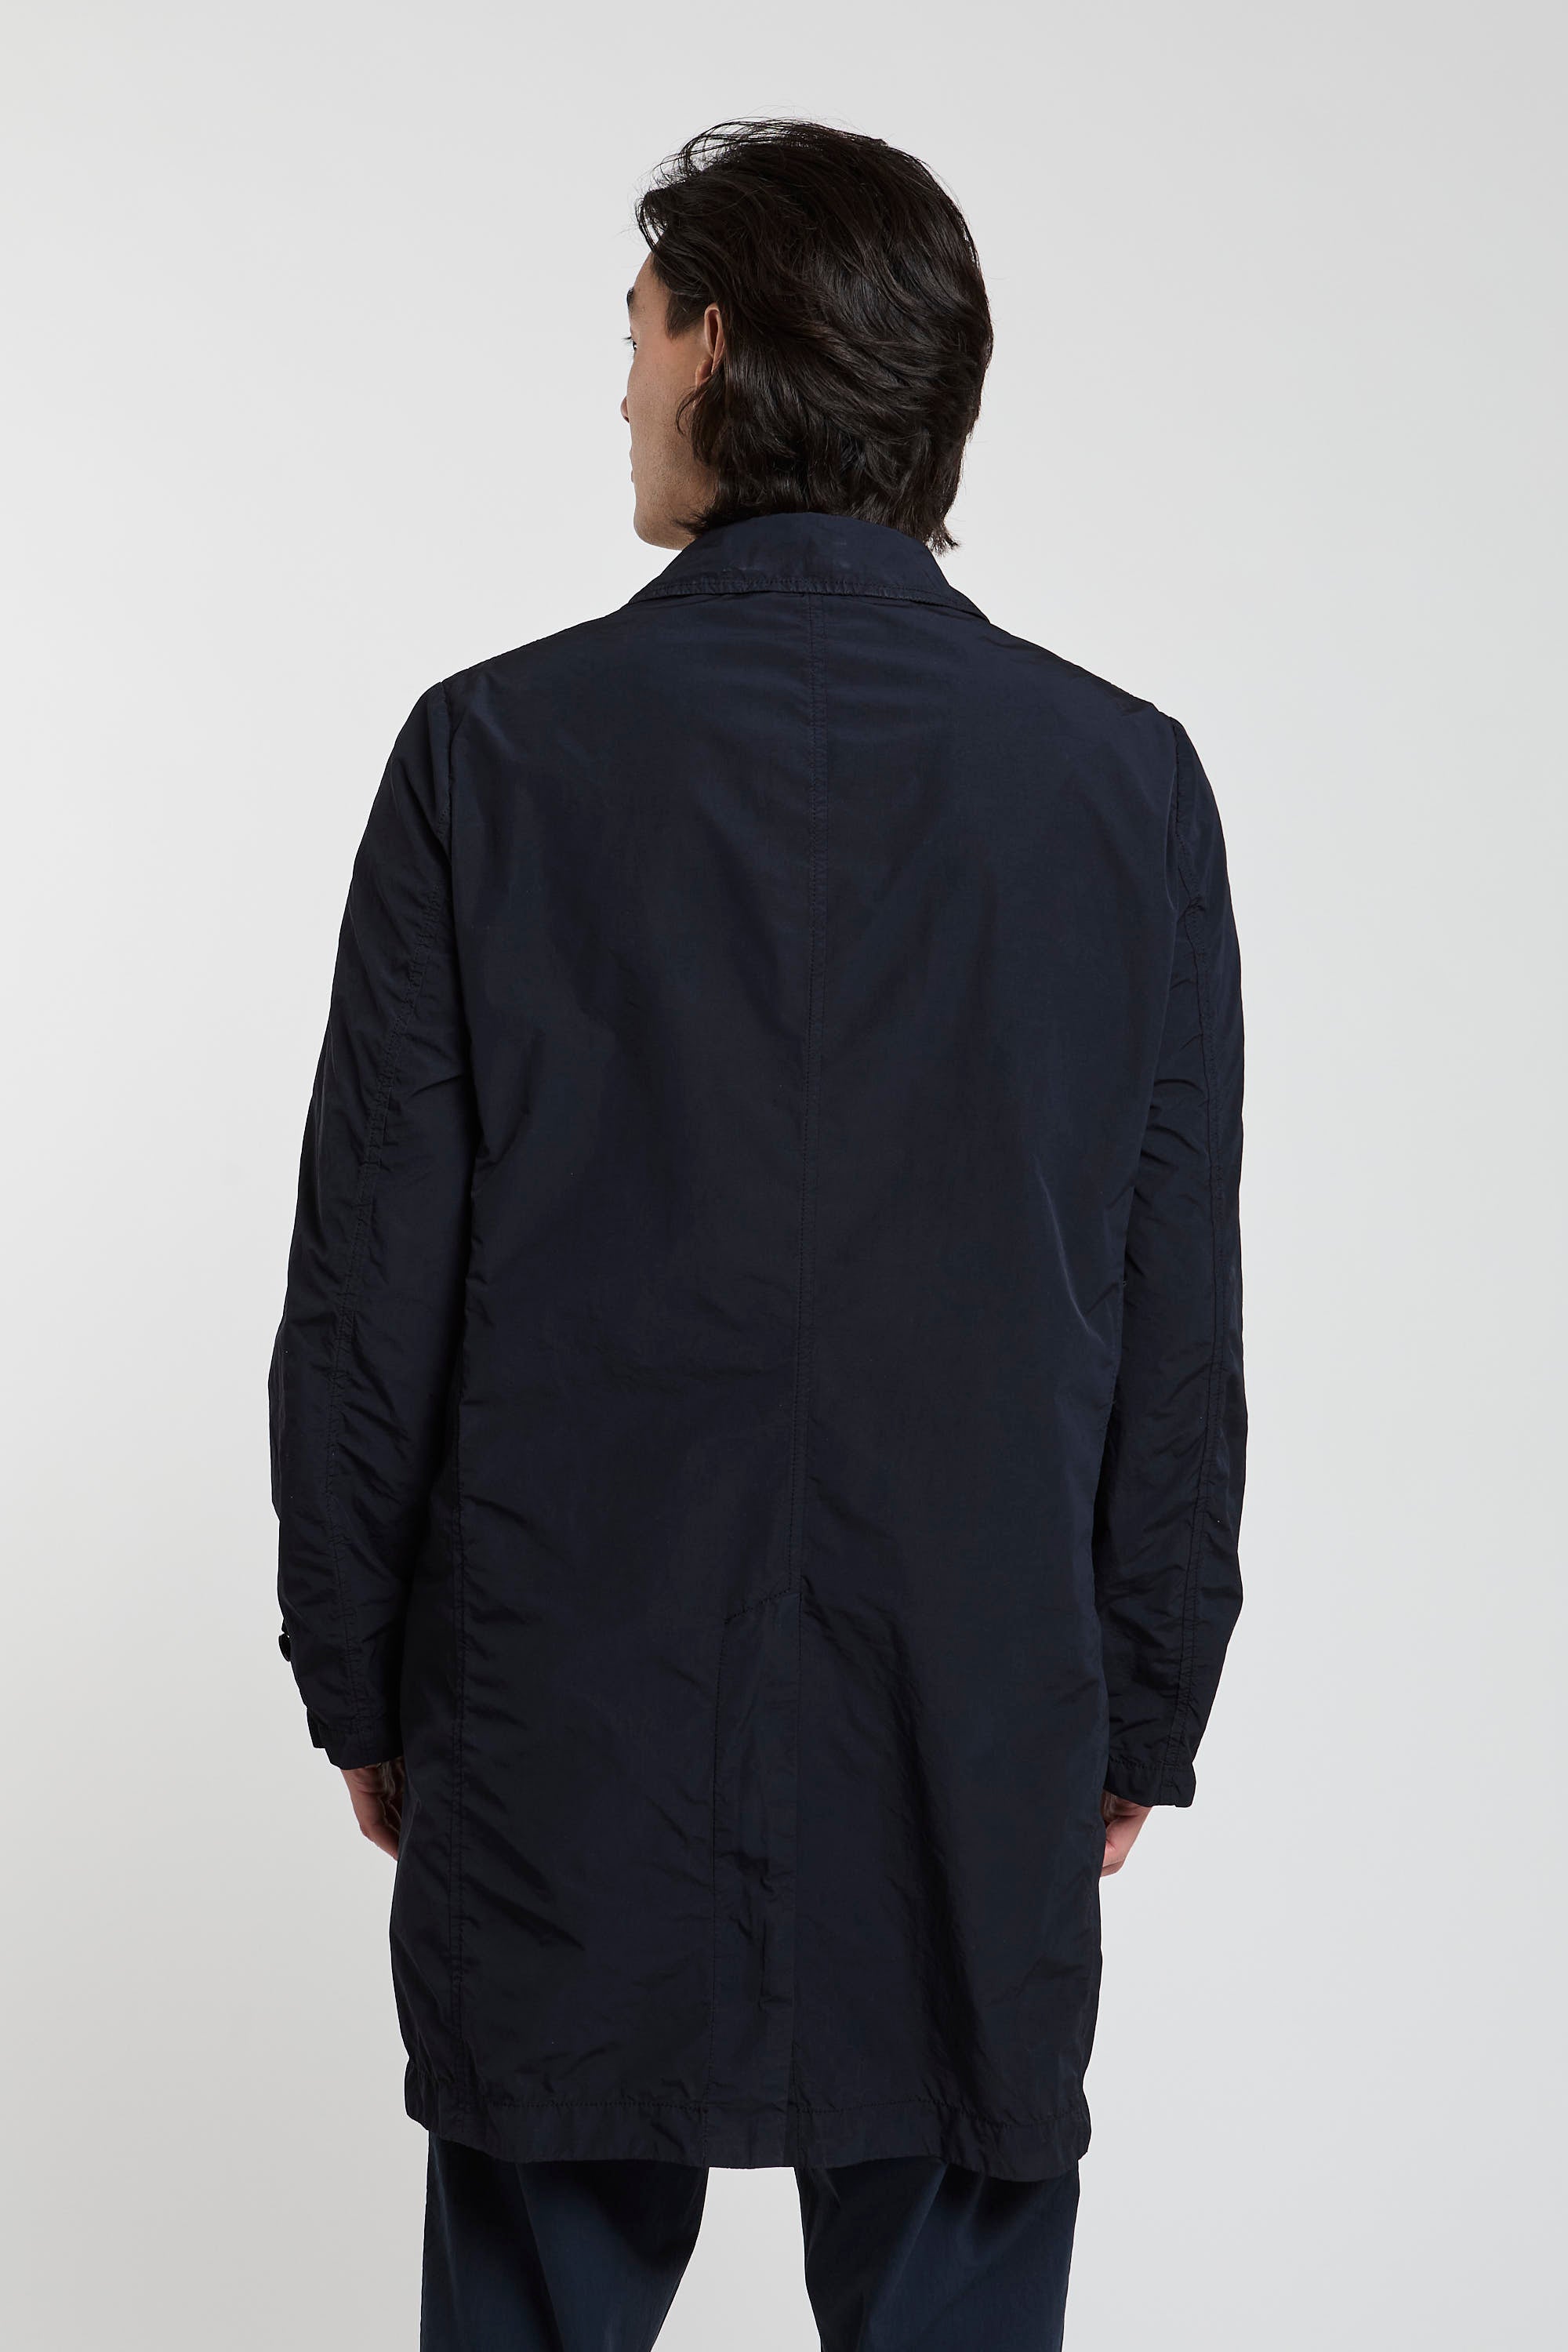 Aspesi Compact Polyester/Nylon Waterproof Jacket in Blue-5